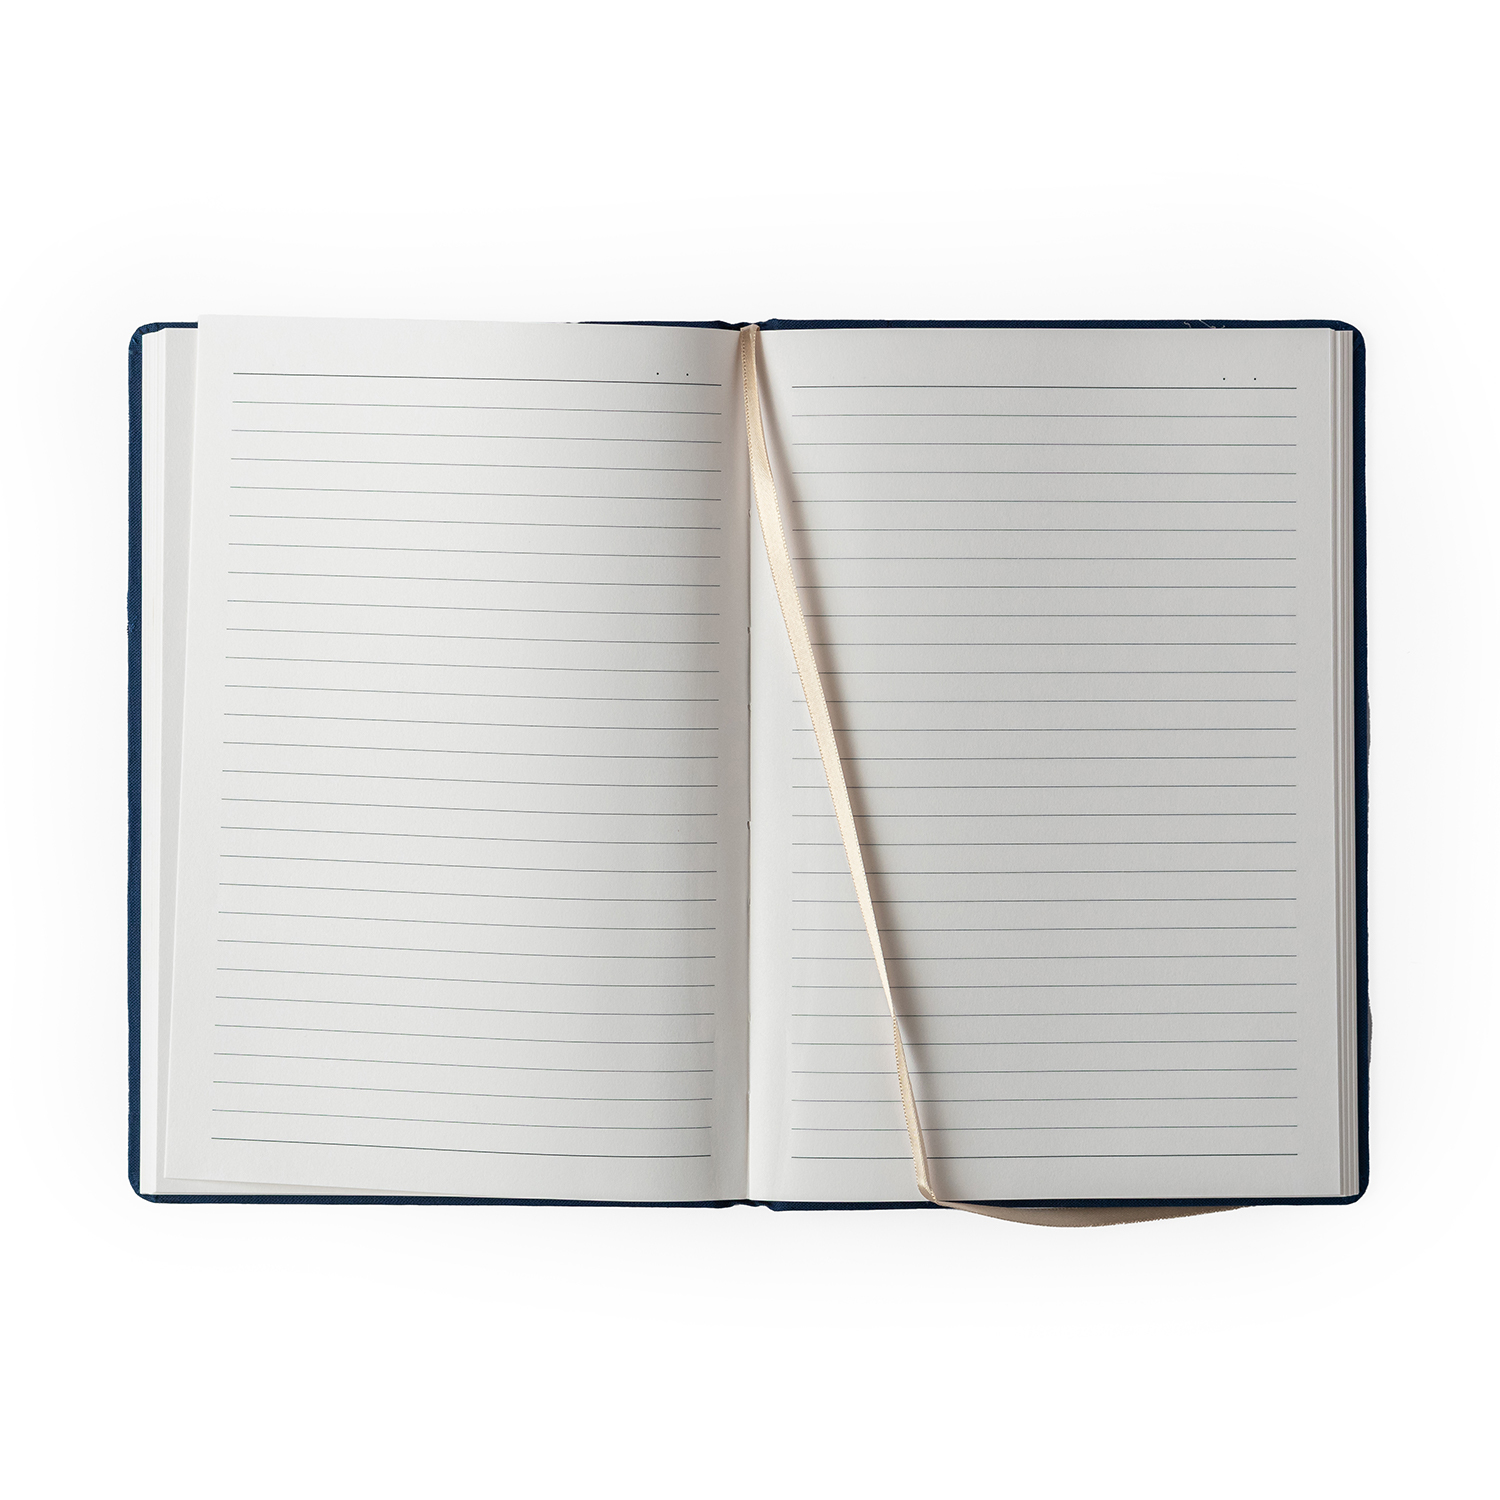 Comma Weave - A5 Size - Hard Bound Notebook (Black)